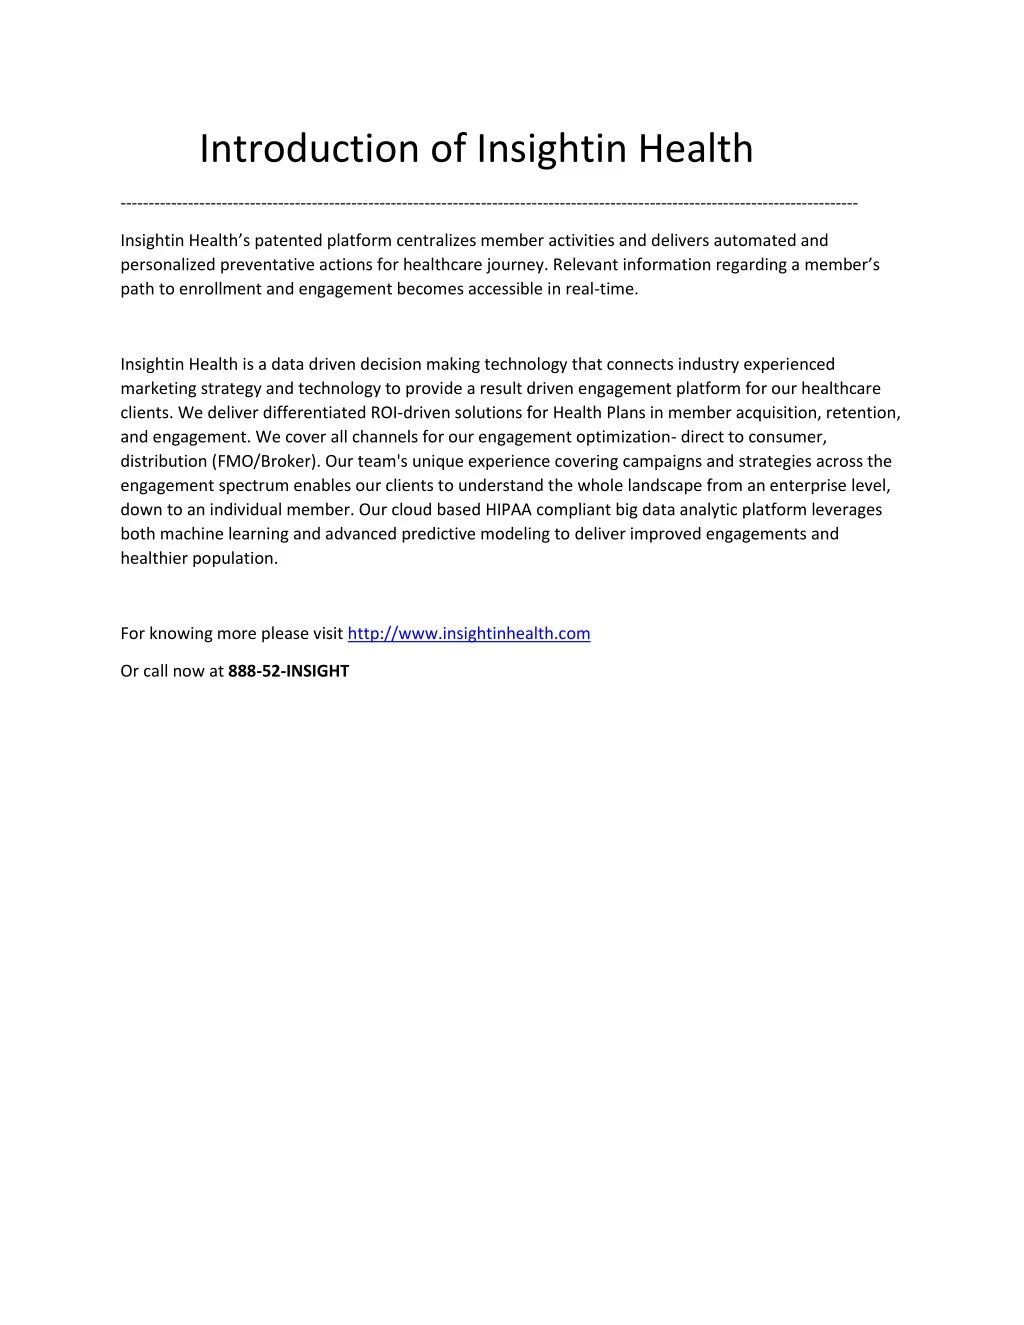 introduction of insightin health